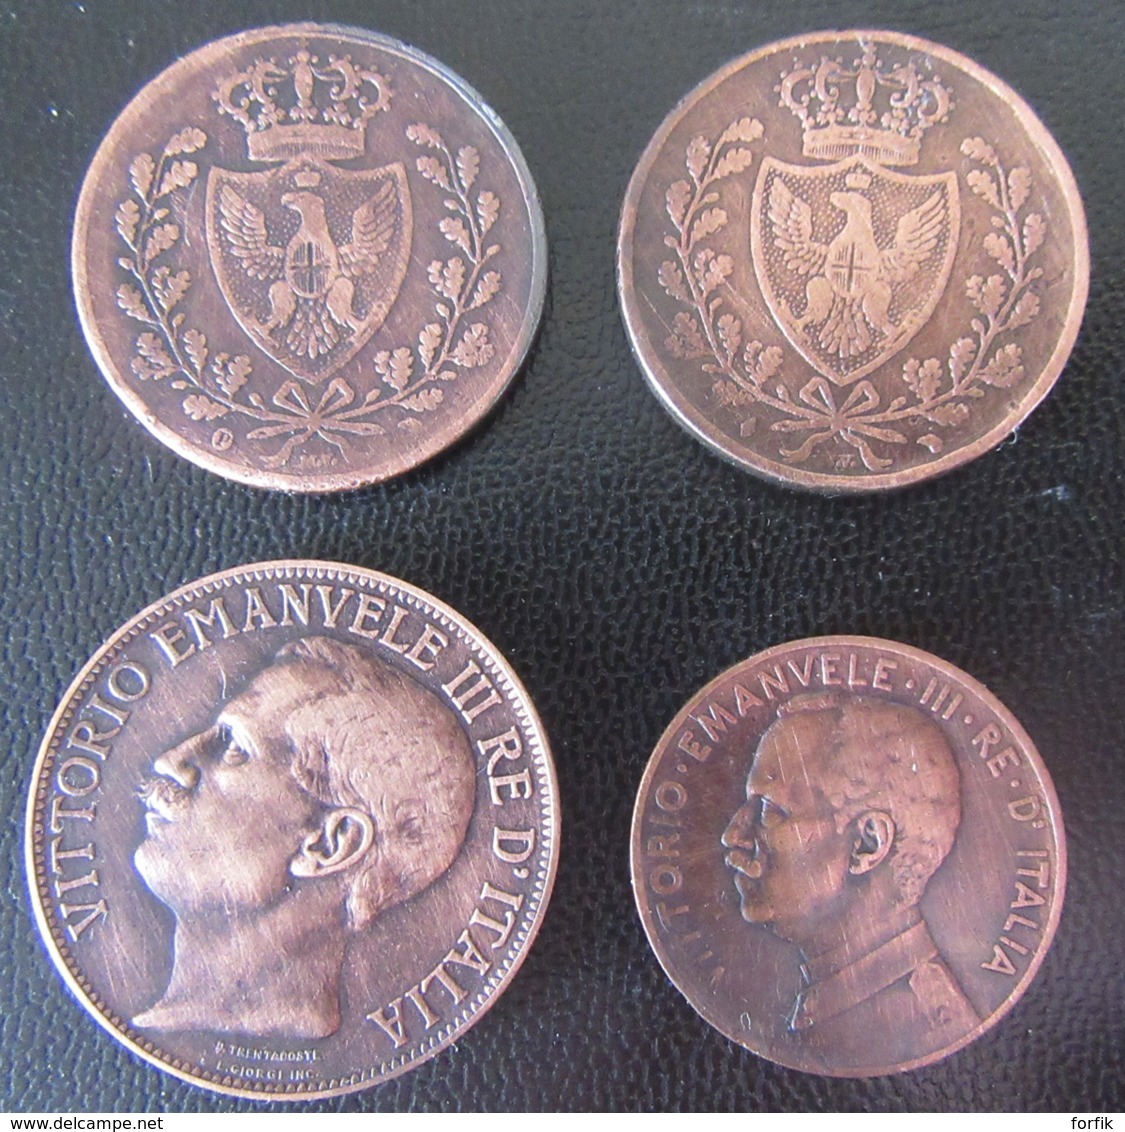 Italie + Royaume De Sardaigne - 4 Monnaies : 5 Centesimi 1826 L Et P, 10 Centesimi 1911, 5 Centesimi 1918 - Colecciones